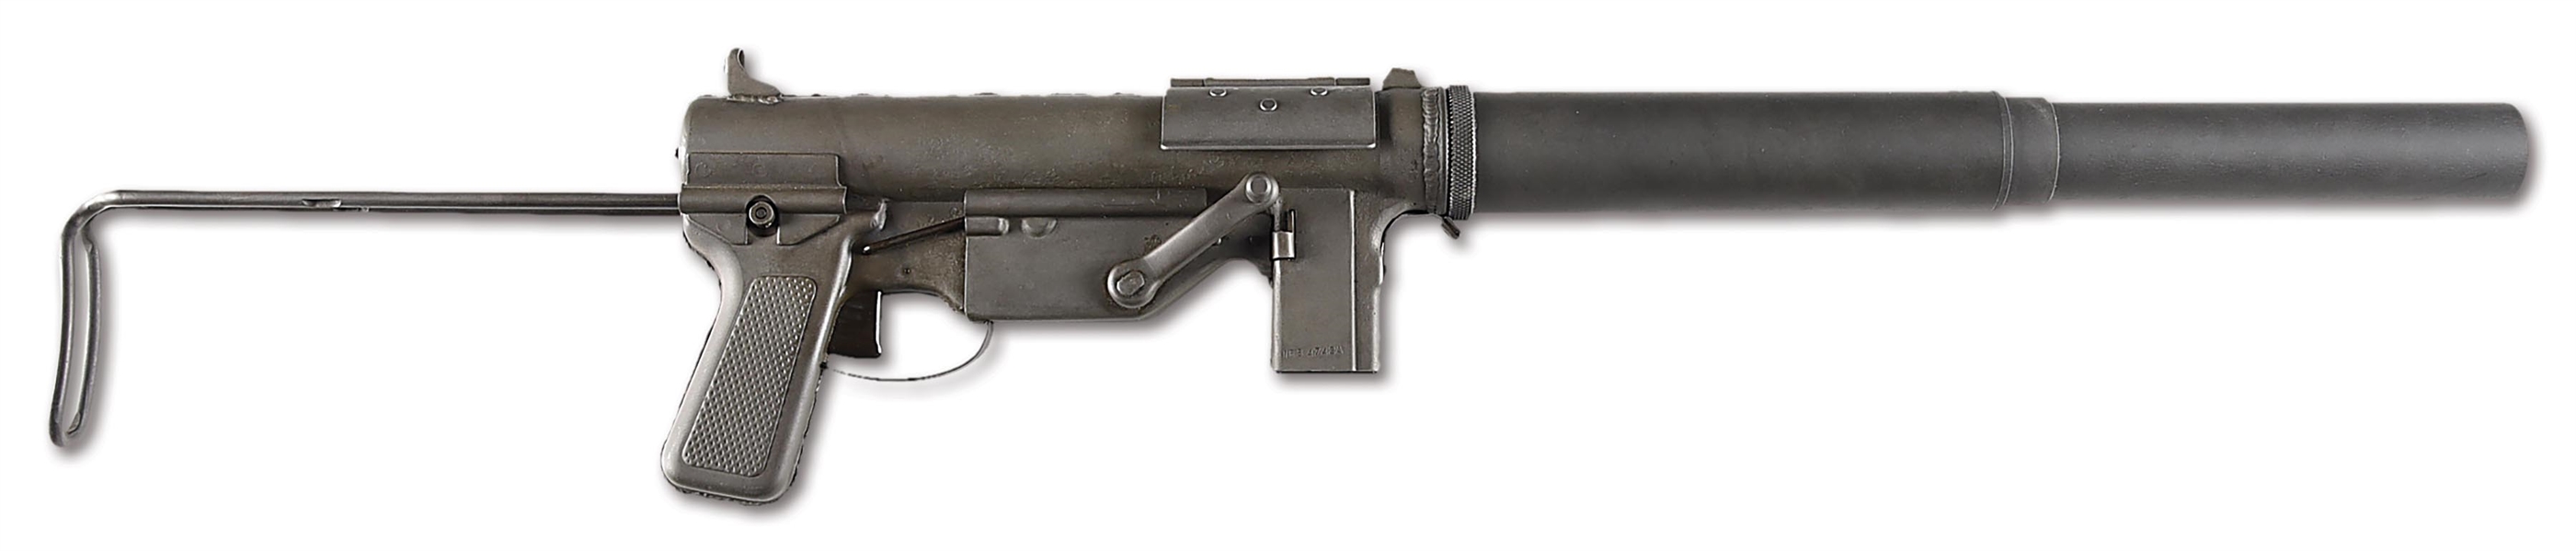 (N) VERY DESIRABLE GUIDE LAMP M3 "GREASE GUN" MACHINE GUN (CURIO & RELIC) WITH S.C.R.C. SILENCER.